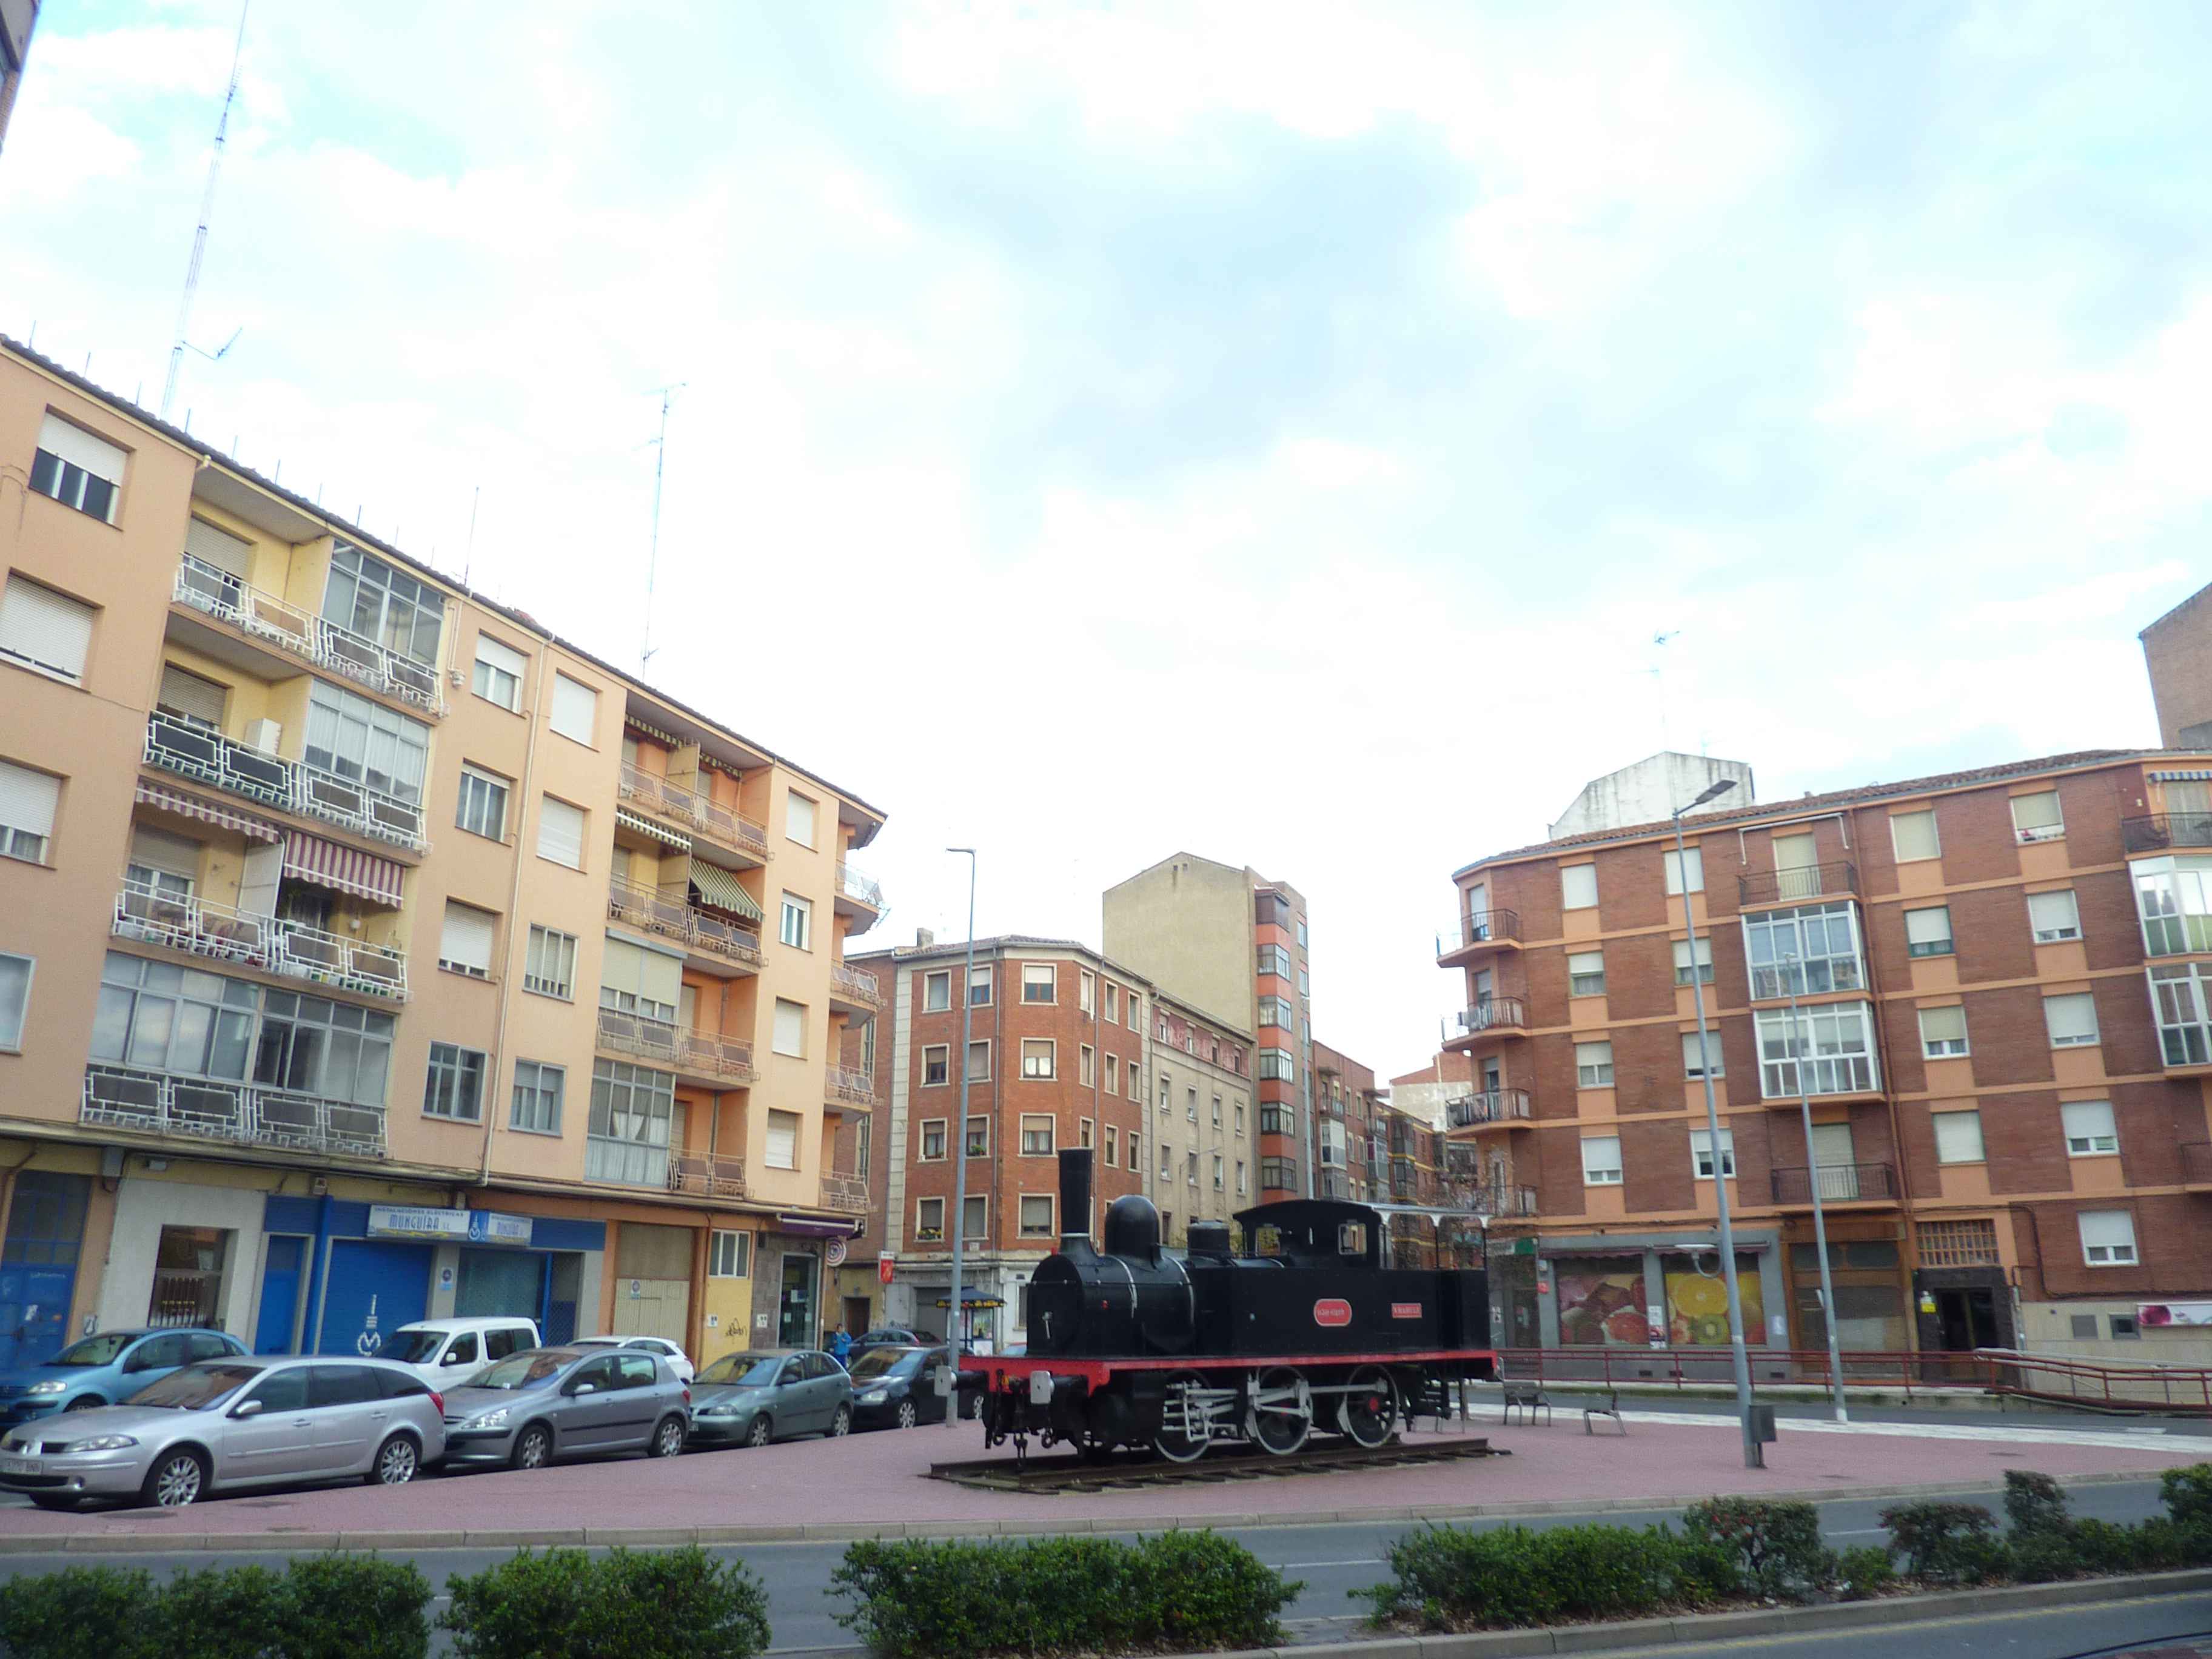 Locomotive Pour Le Nom De La Rue A Miranda De Ebro en Images